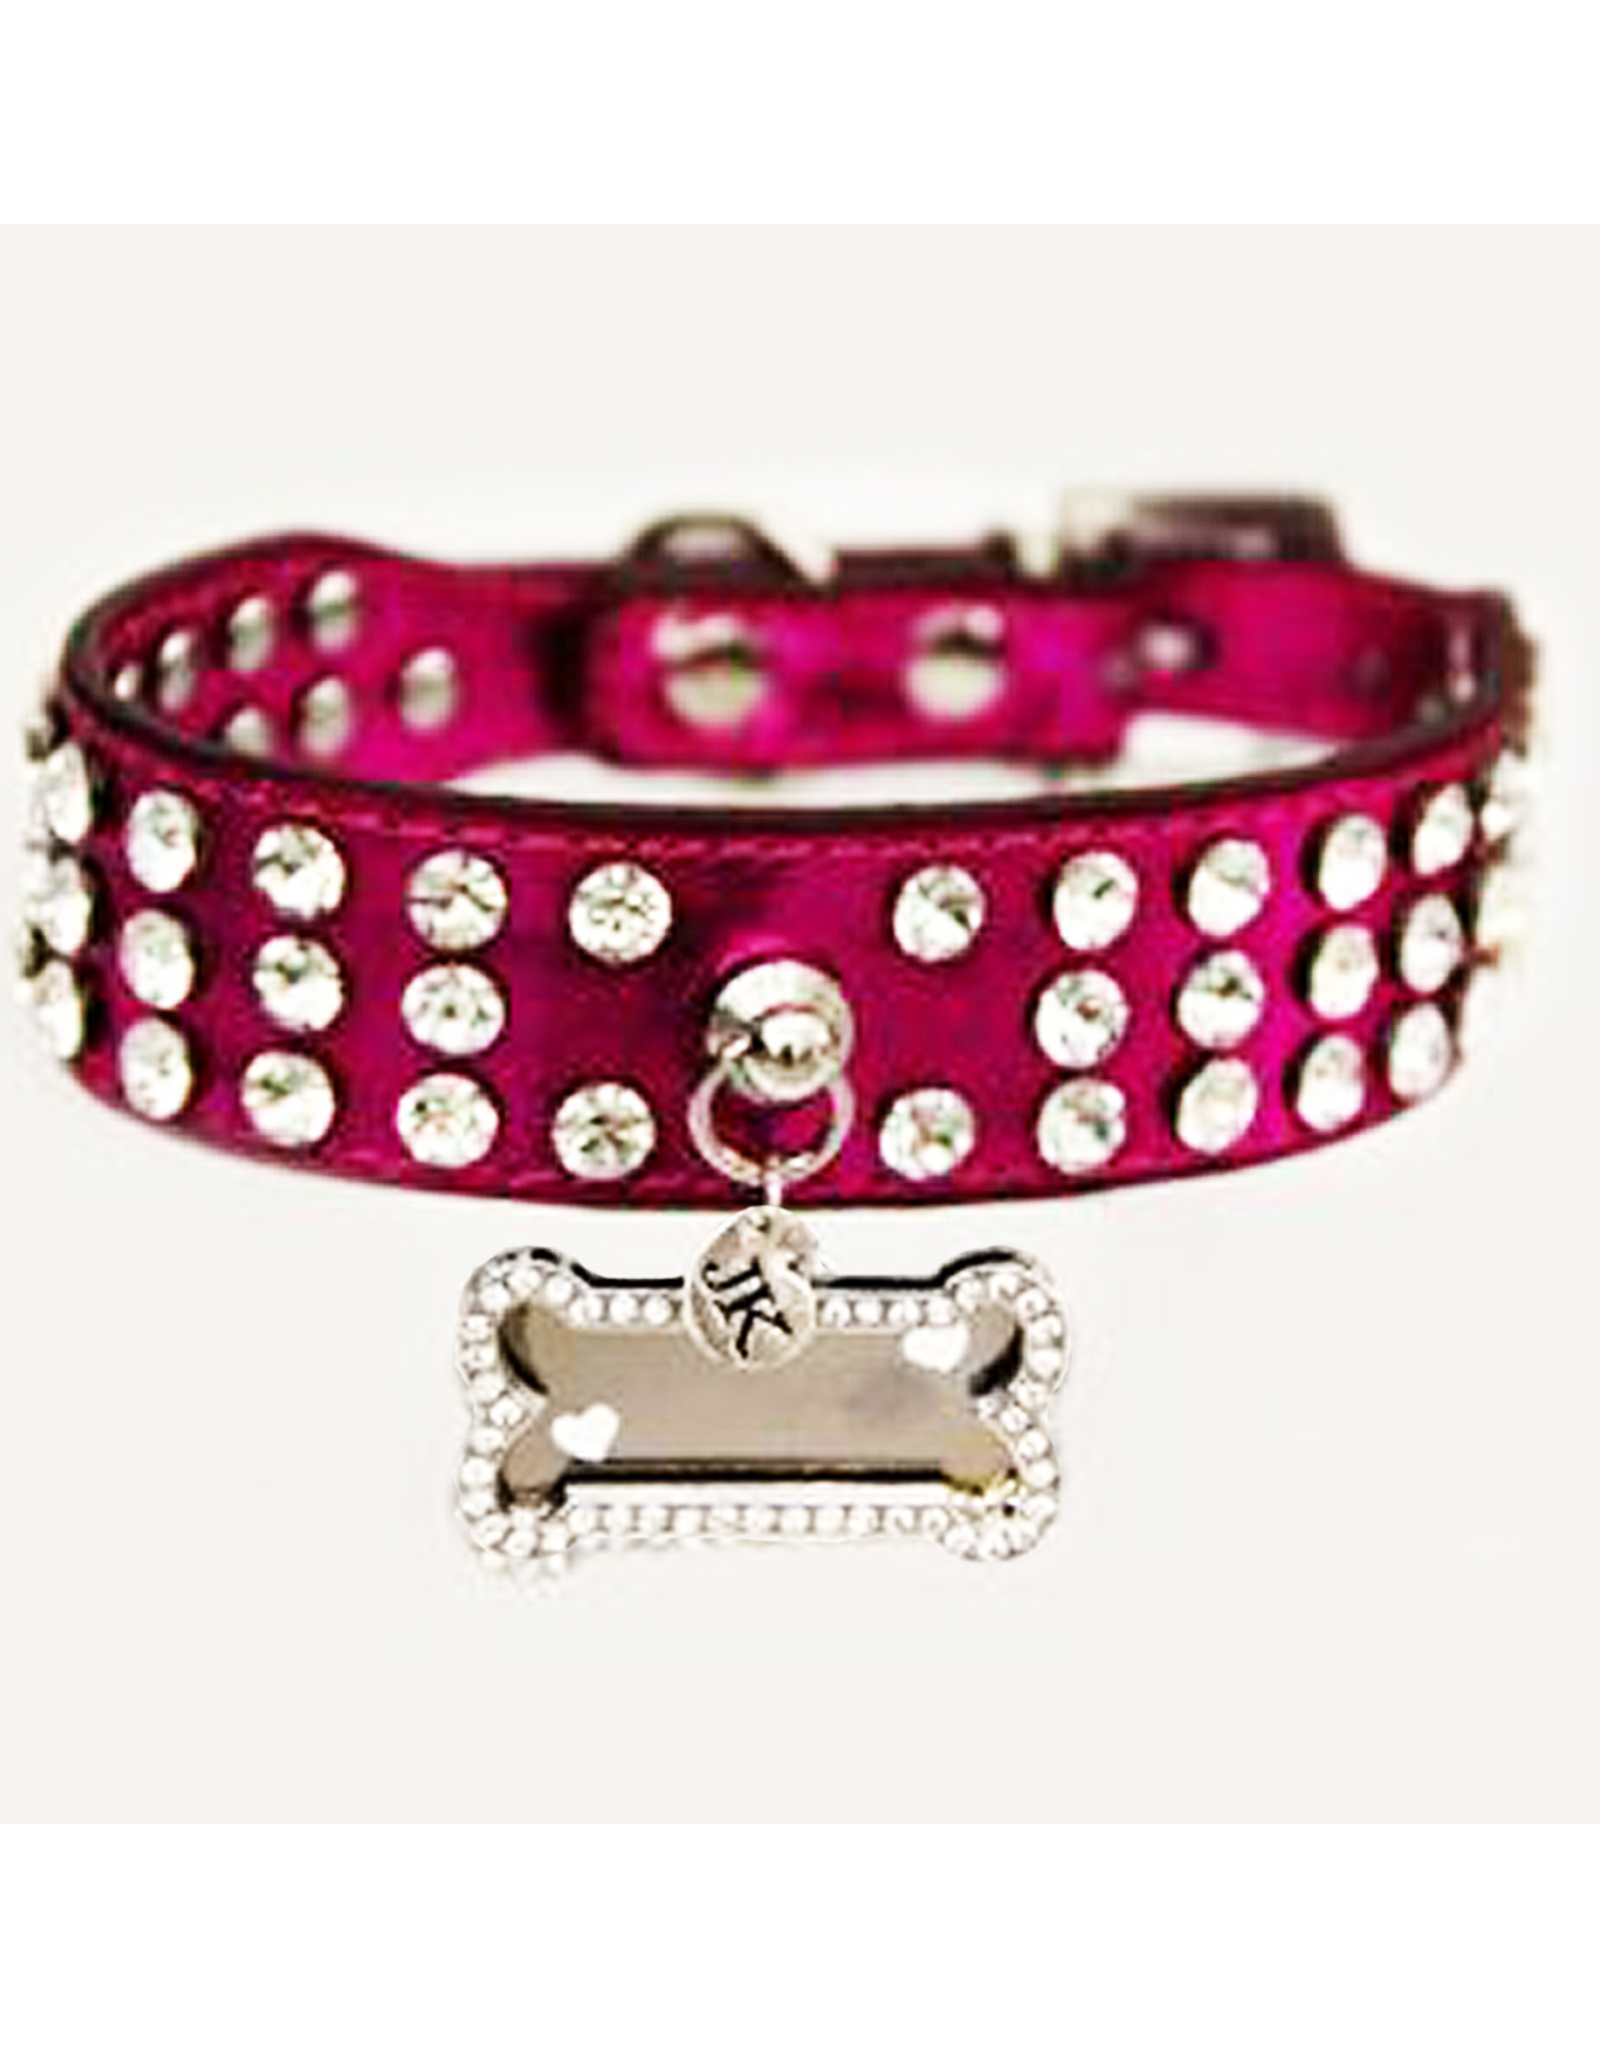 Jacqueline Kent Jewelry Rhinestone Dog Collar Pink Small 15 Inch